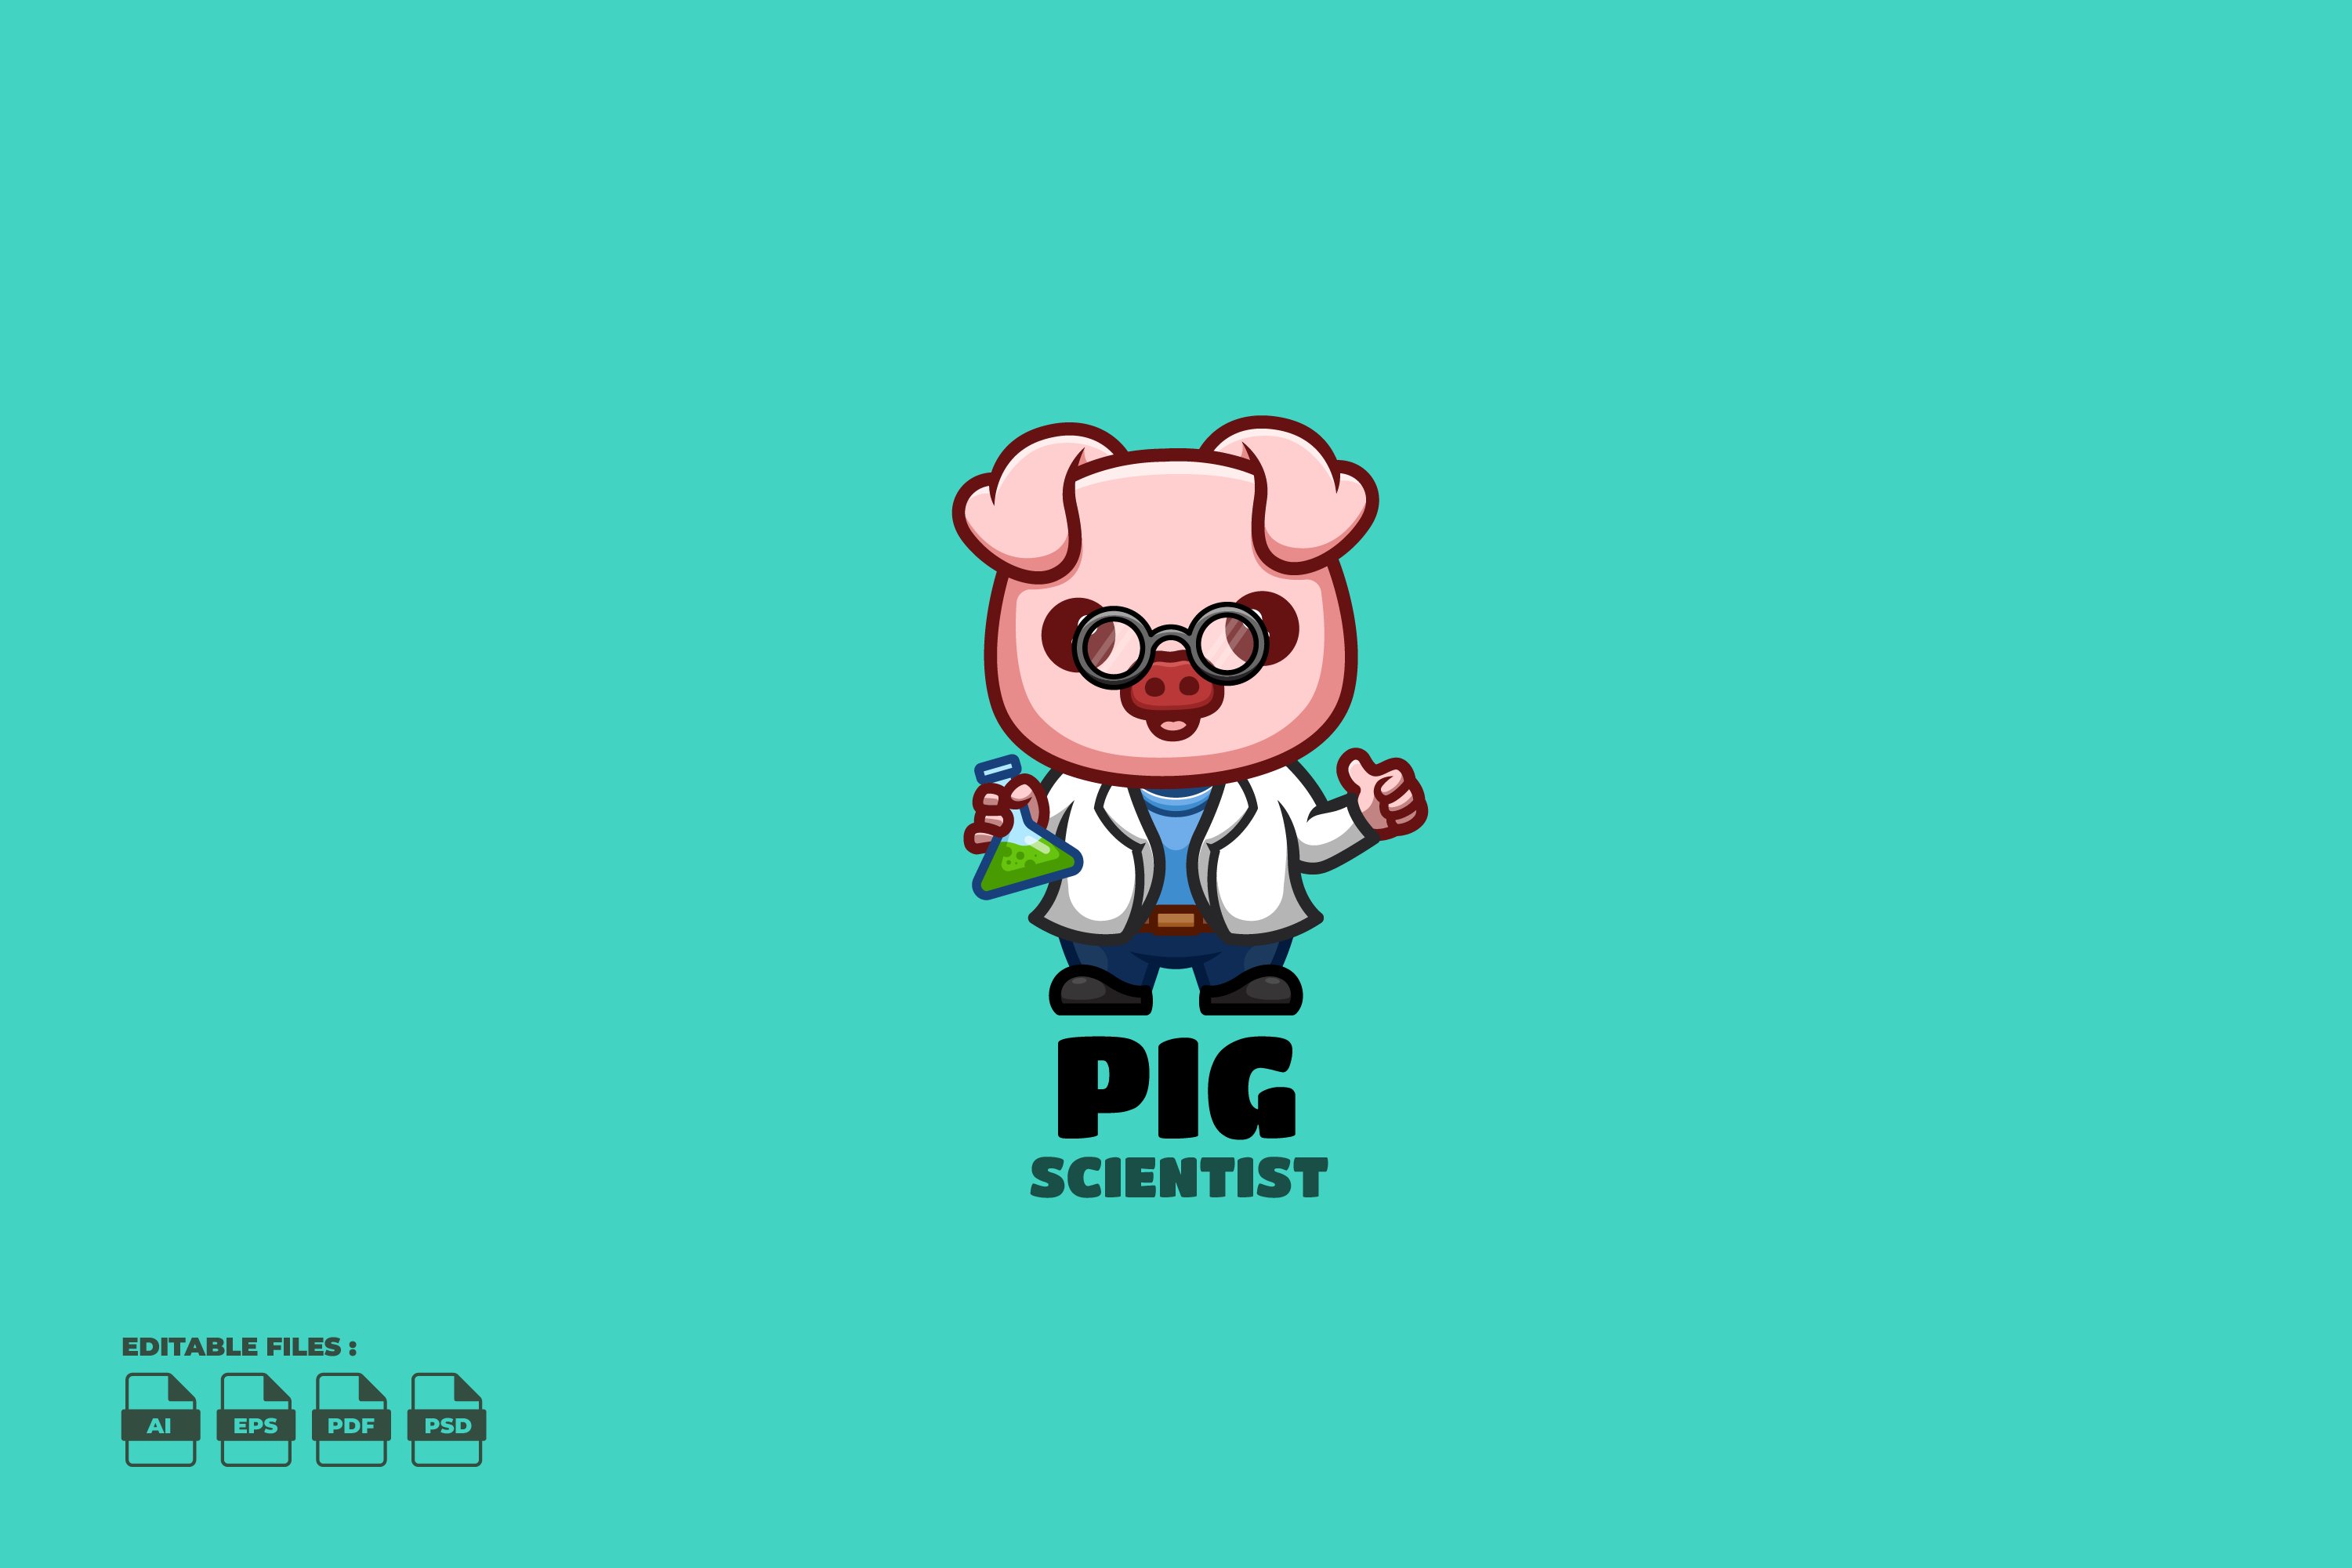 Scientist Pig Cute Mascot Logo cover image.